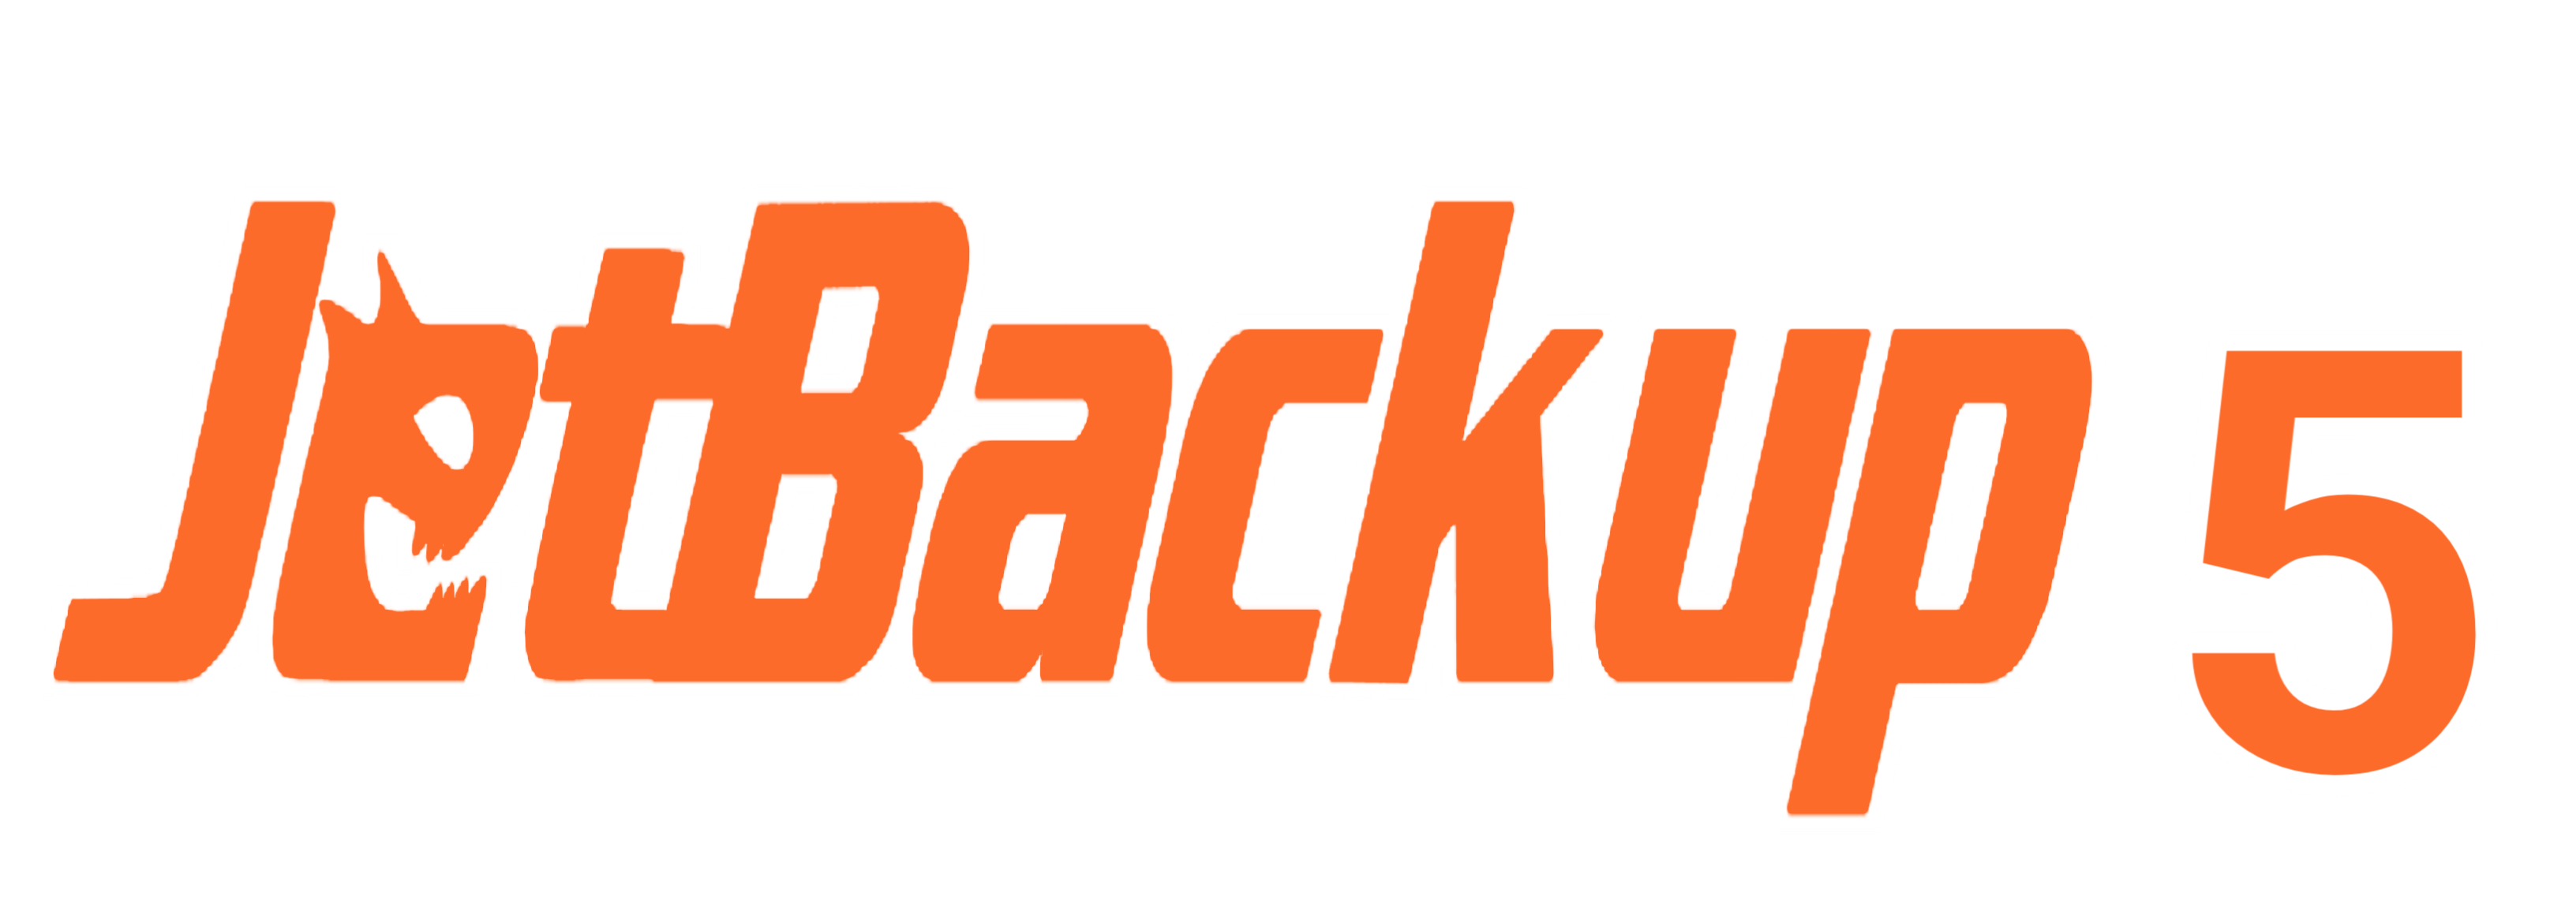 jetbackup5 logo